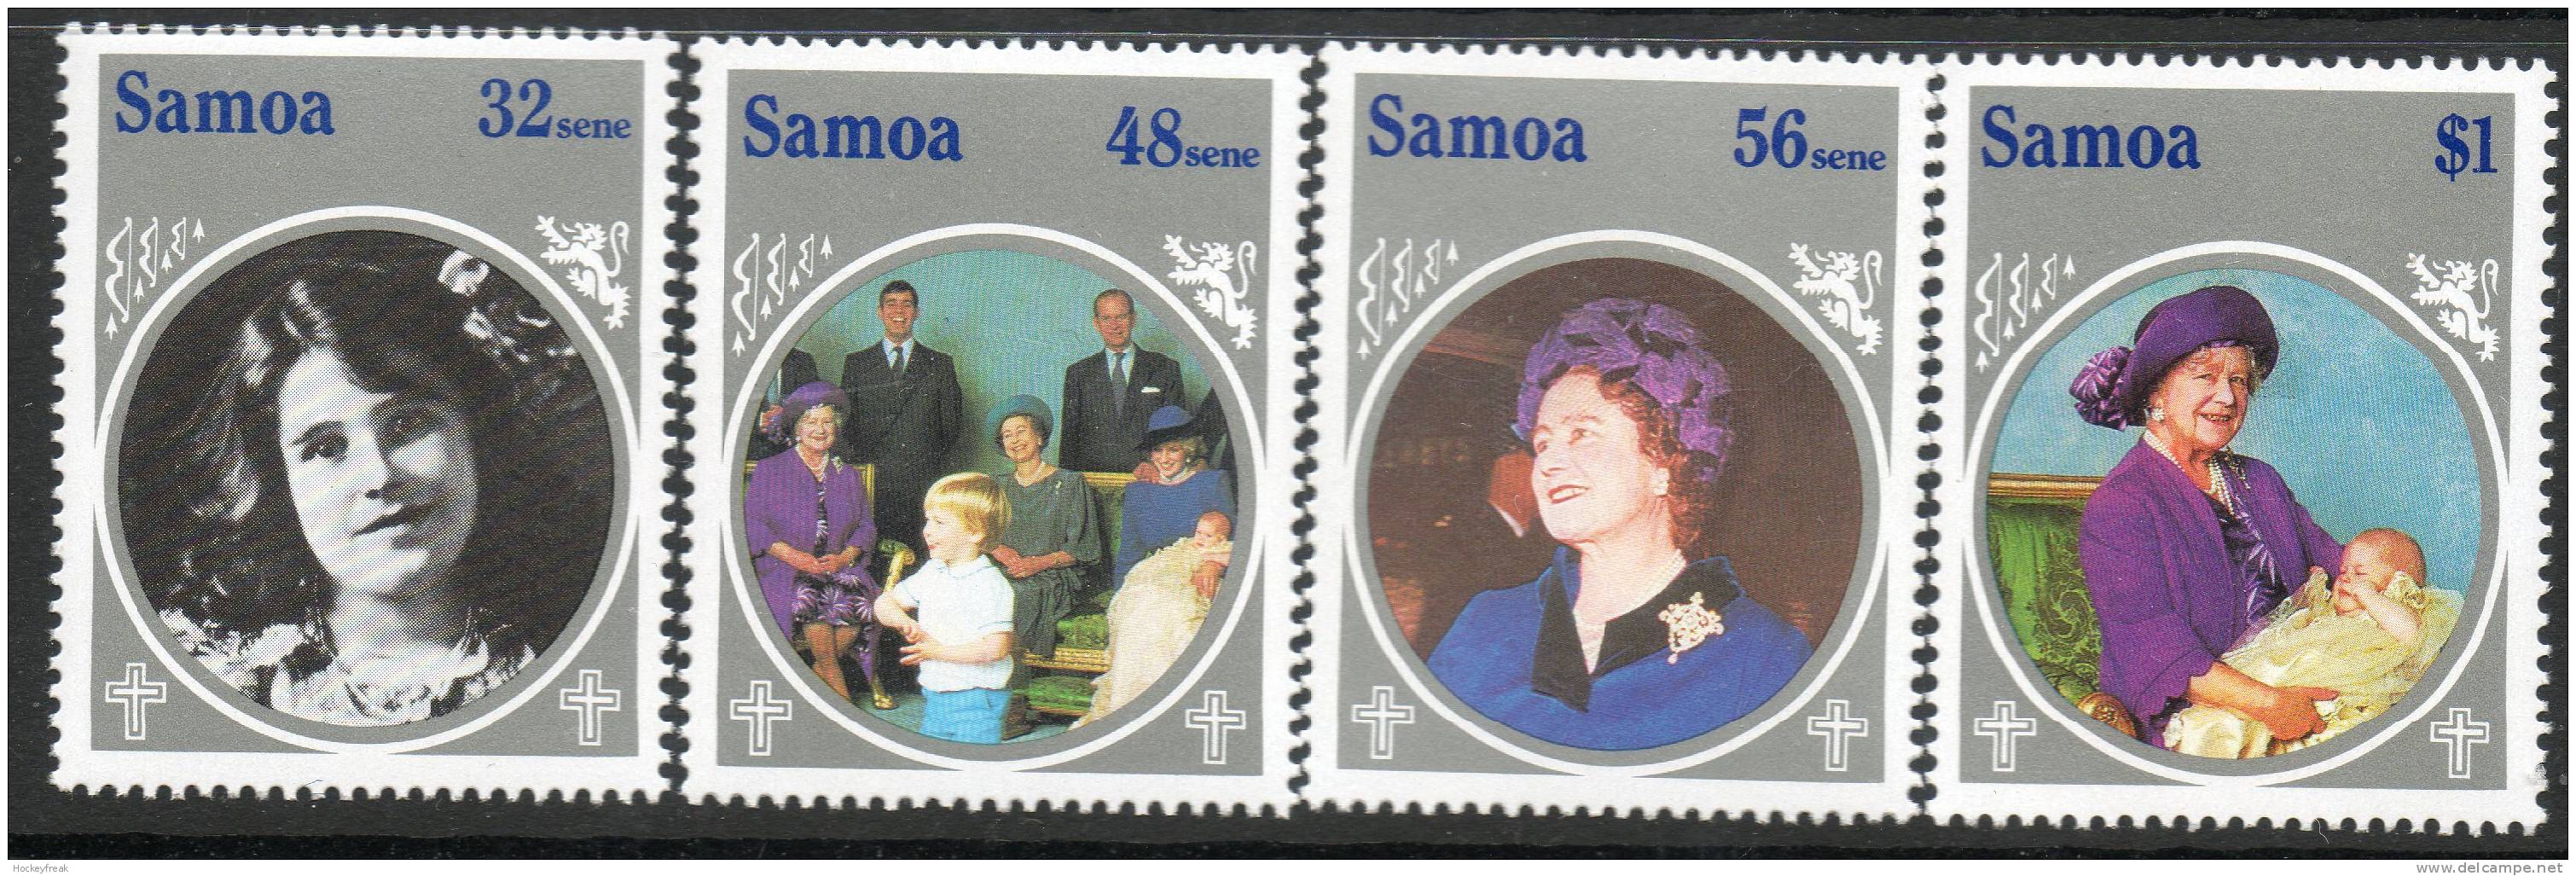 Samoa 1985 - Life & Times Of HM Queen Elizabeth The Queen Mother SG700-703 MNH Cat £4.40 SG2015 - Samoa